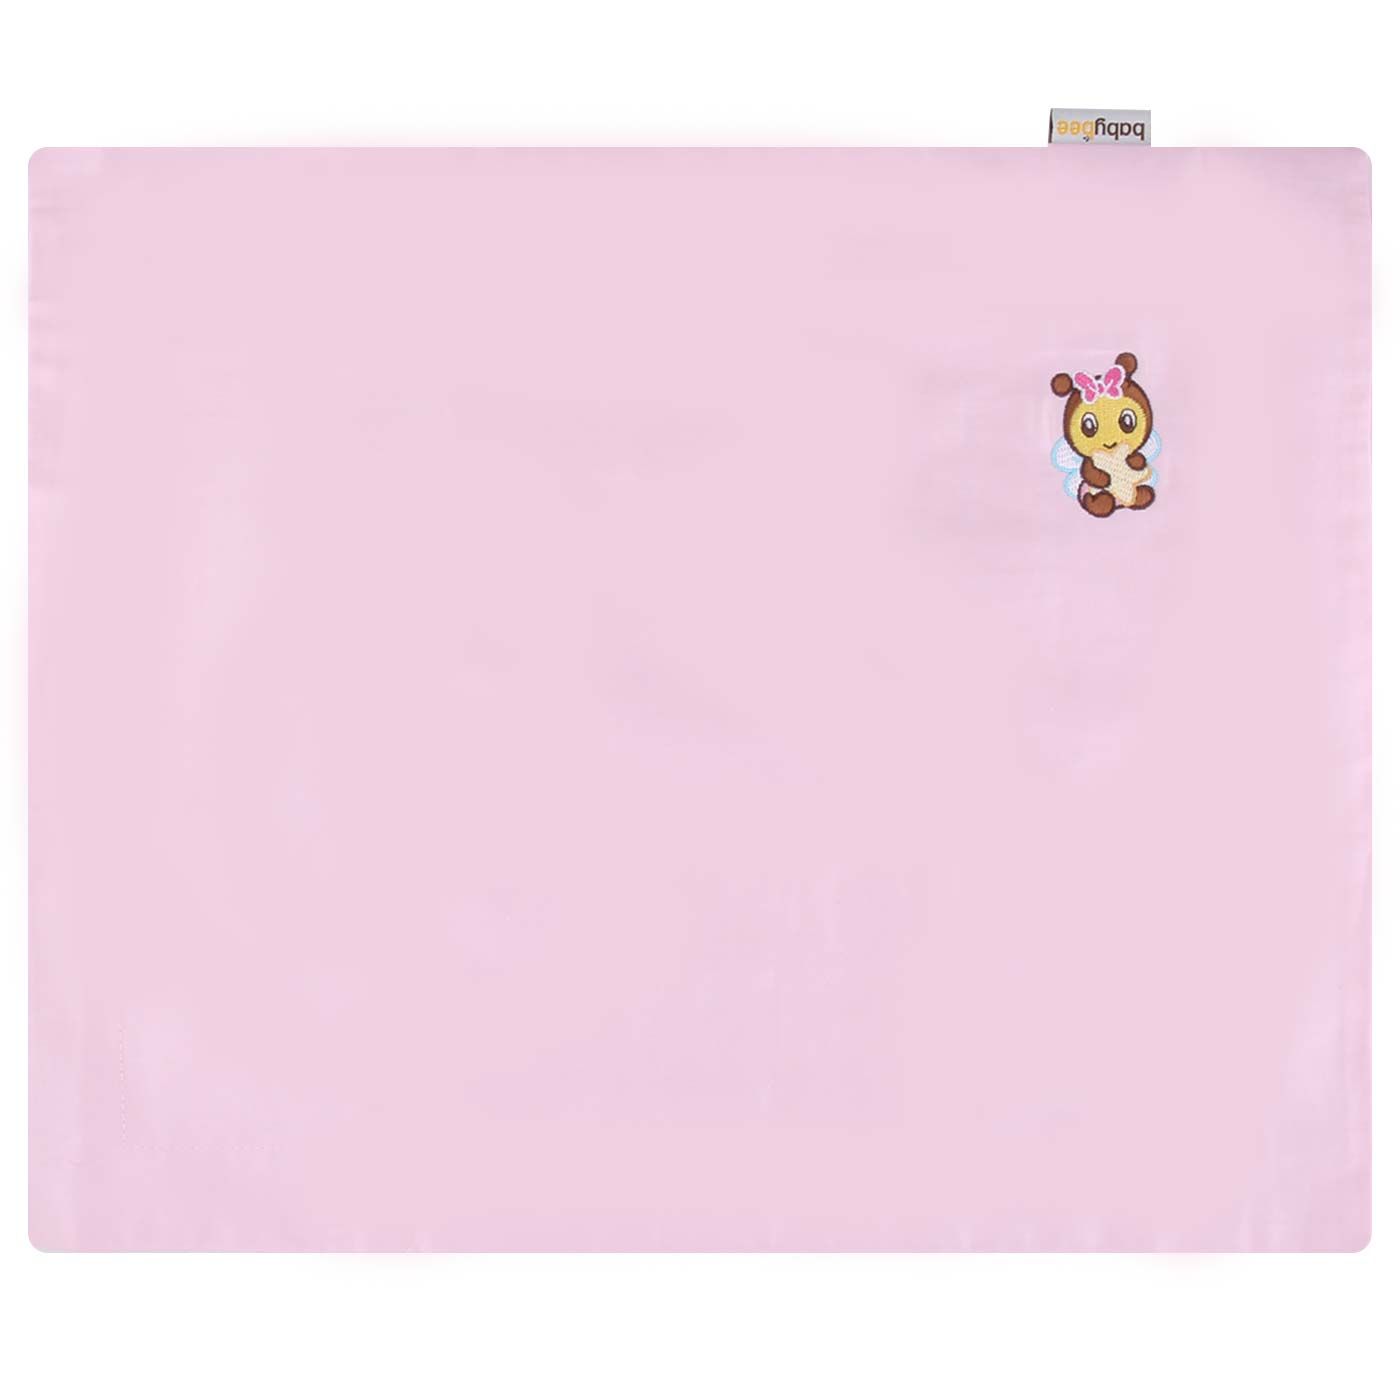 Infant Pillow Case Pink - 1